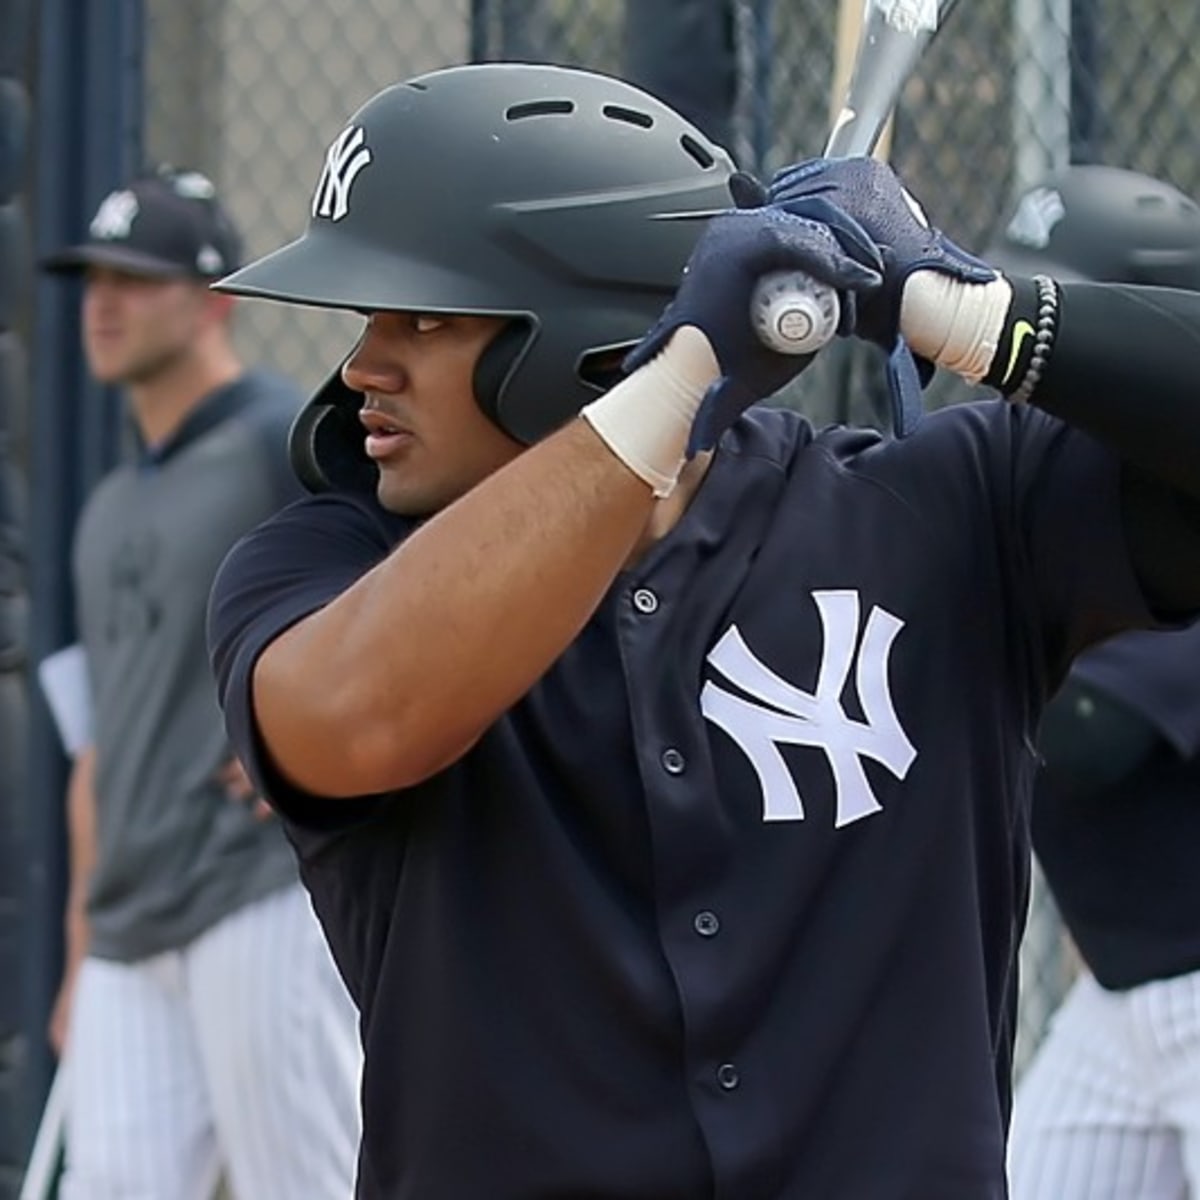 Jasson Domínguez injury update: Yankees prospect undergoes Tommy